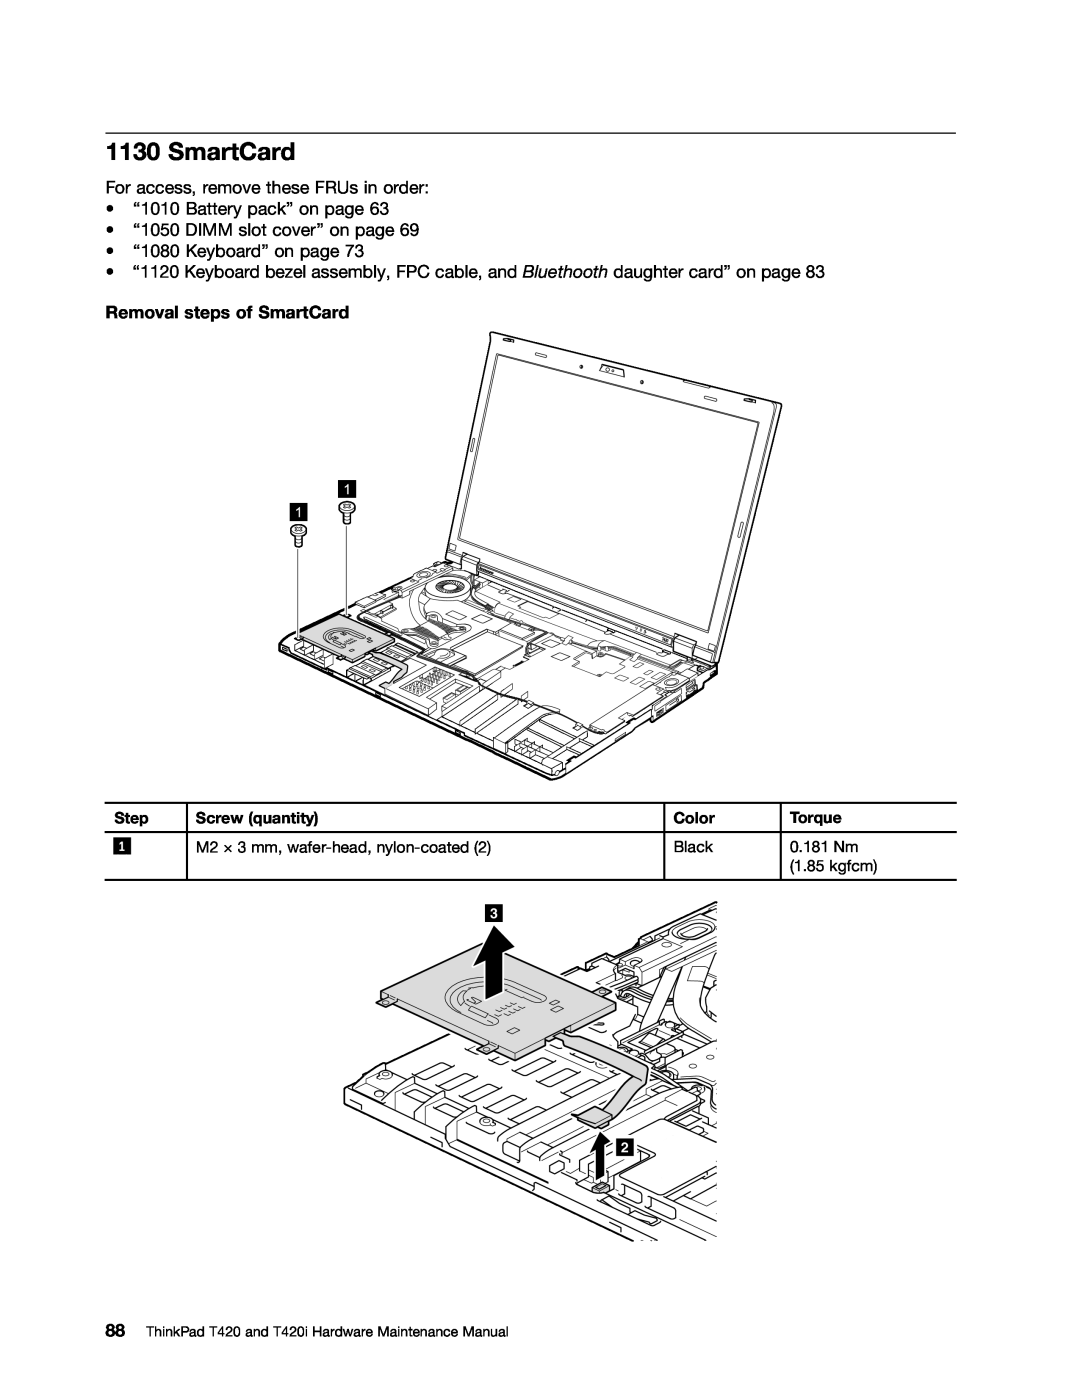 Lenovo T420i manual Removal steps of SmartCard 